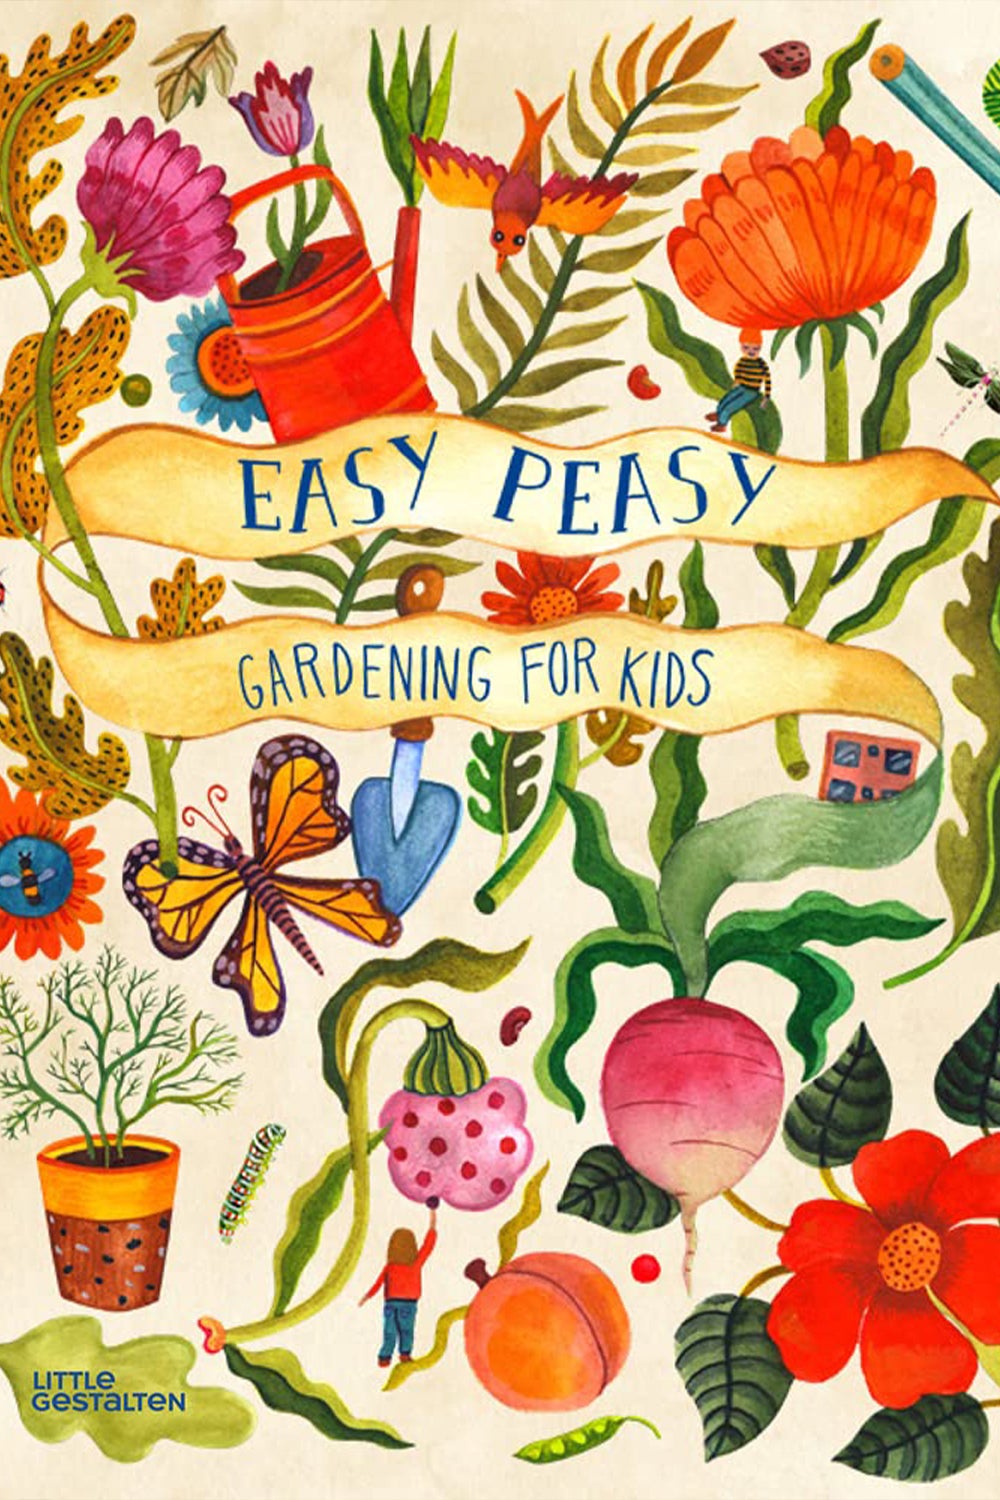 Easy Peasy Gardening for Kids by Kirsten Bradley